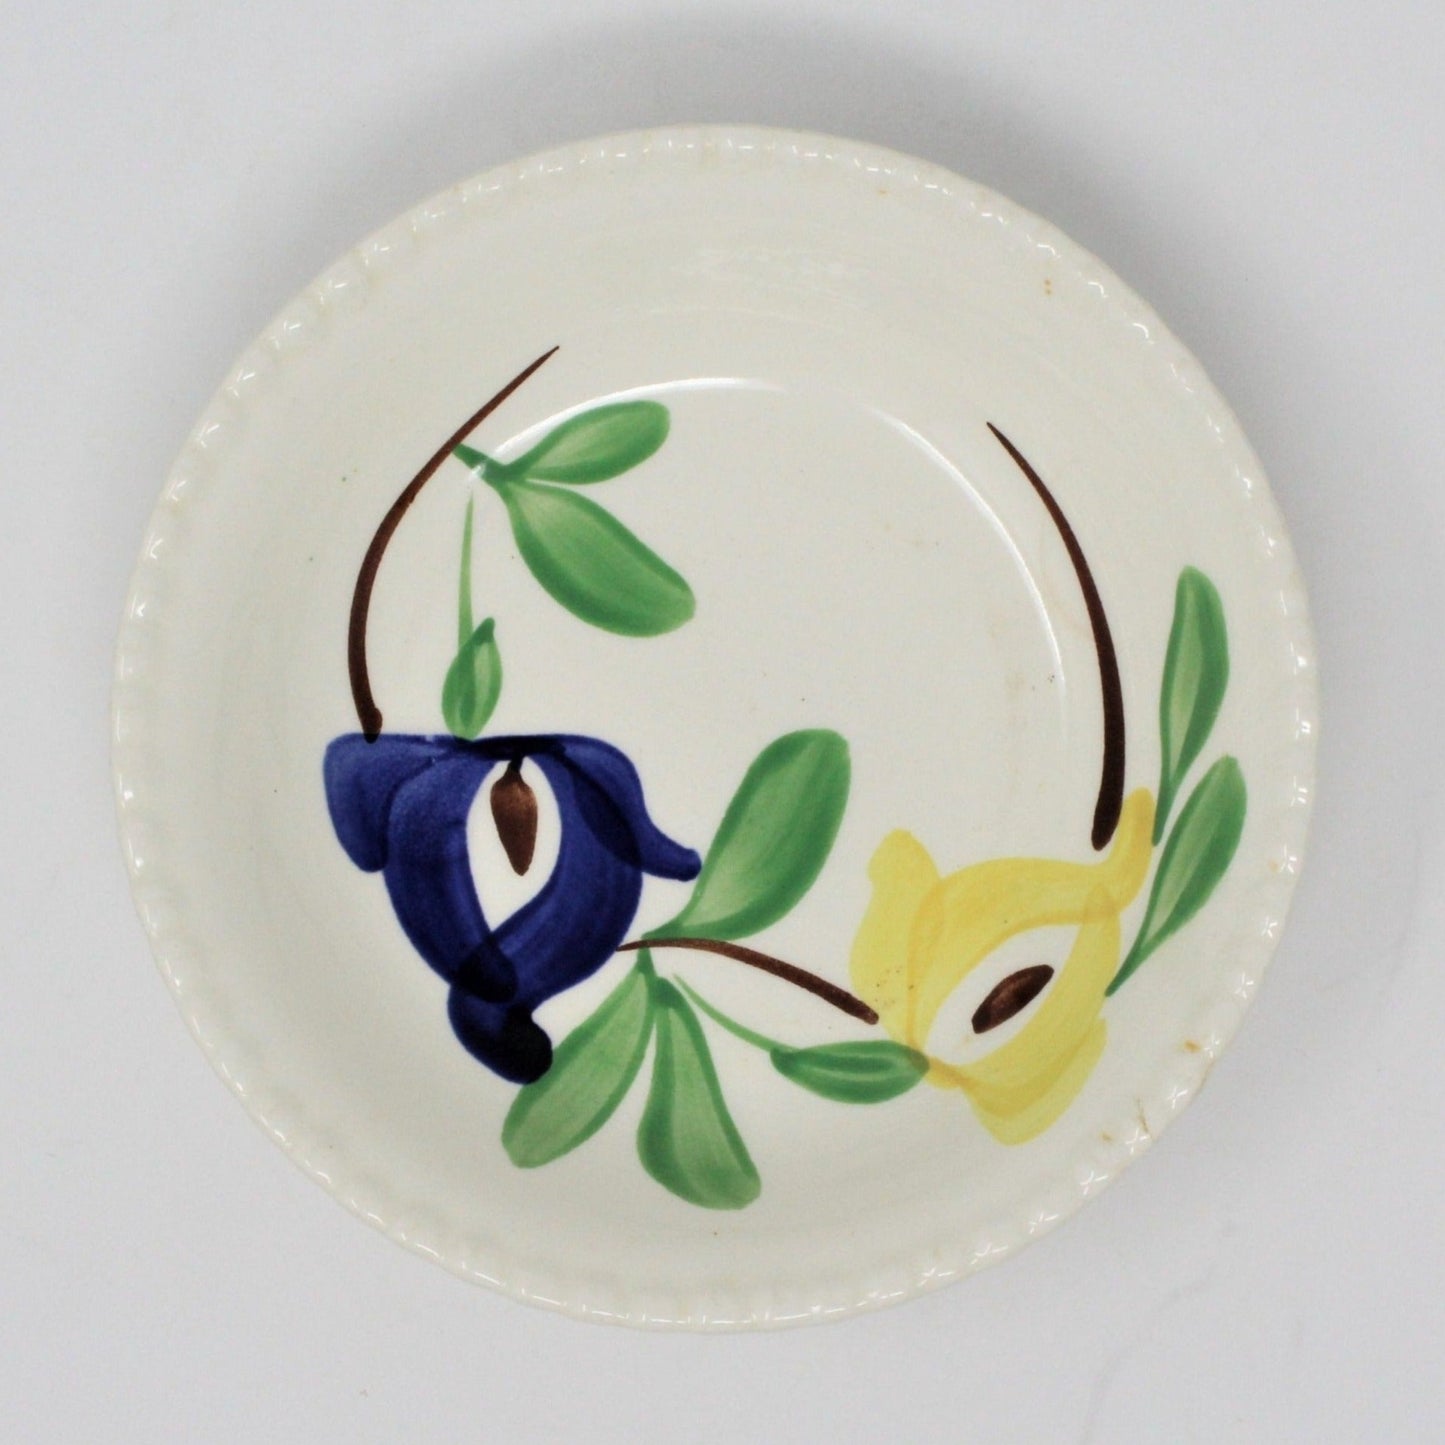 Fruit / Dessert Bowl, Blue Ridge Southern Pottery, Carnival, Ceramic, Vintage